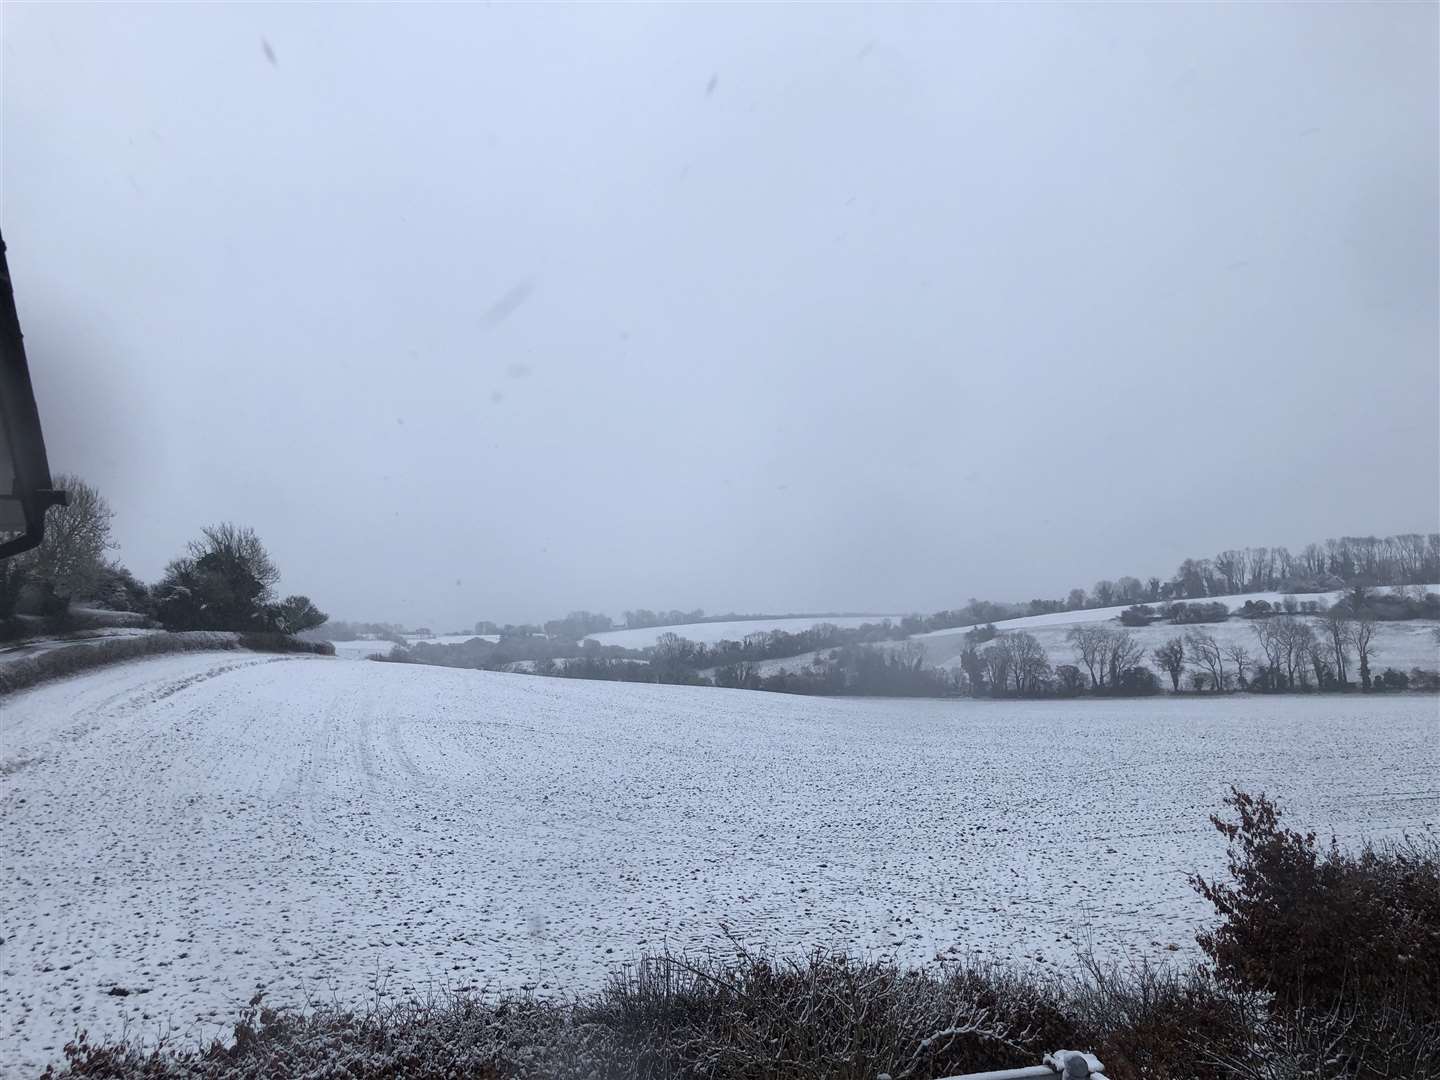 Snow has fallen in Hastingleigh near Ashford today